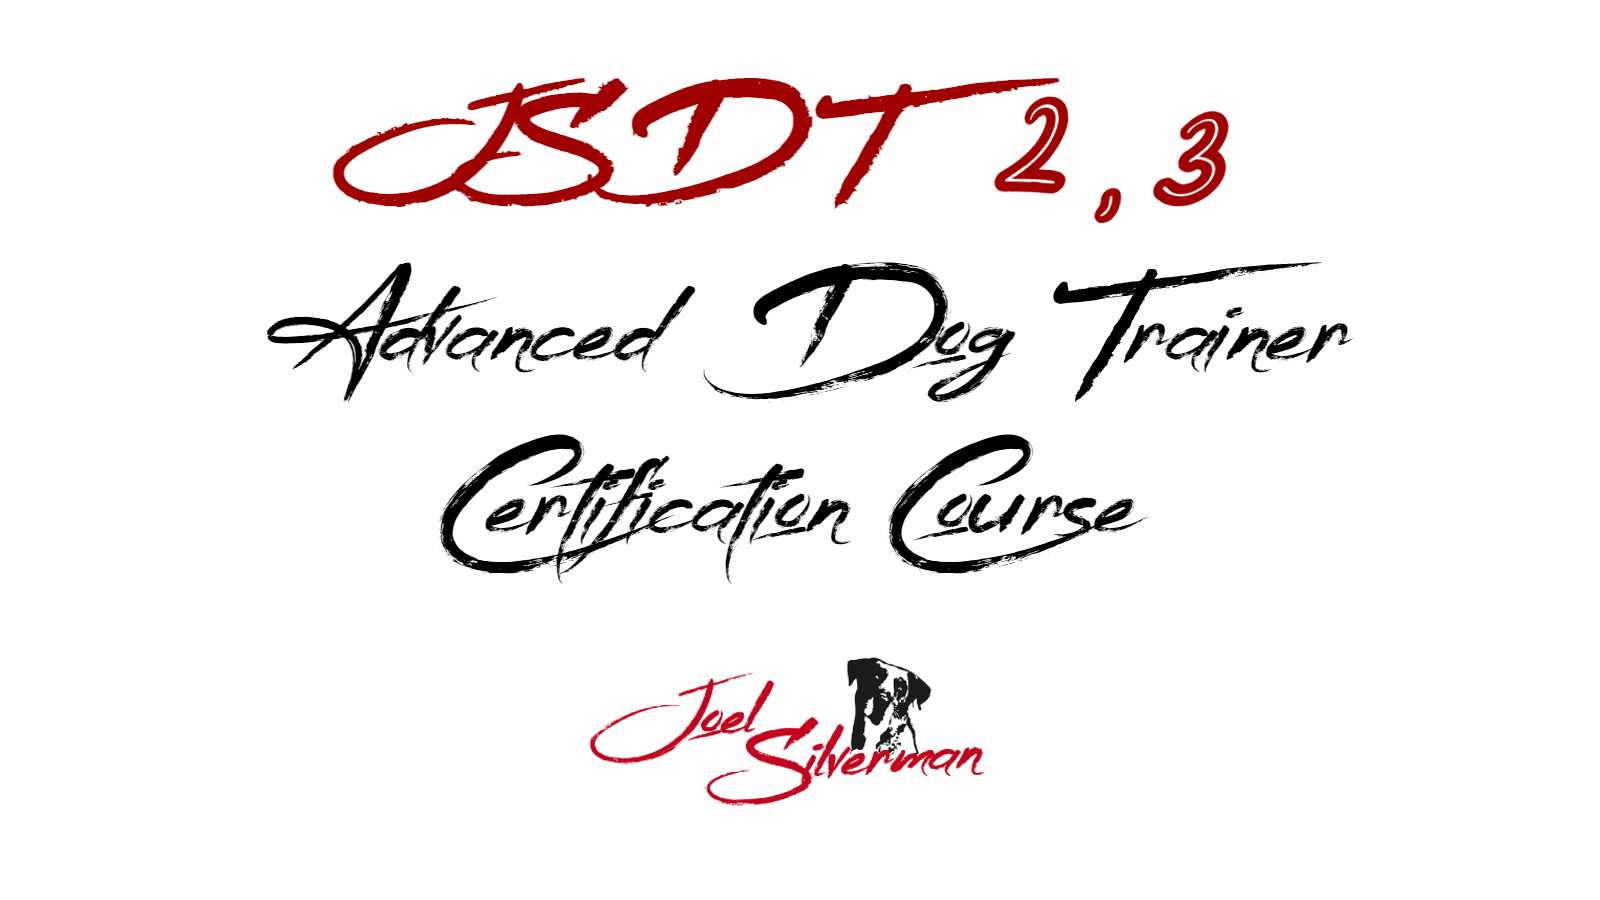 Joel Silvermans Advanced Dog Training Certification Course